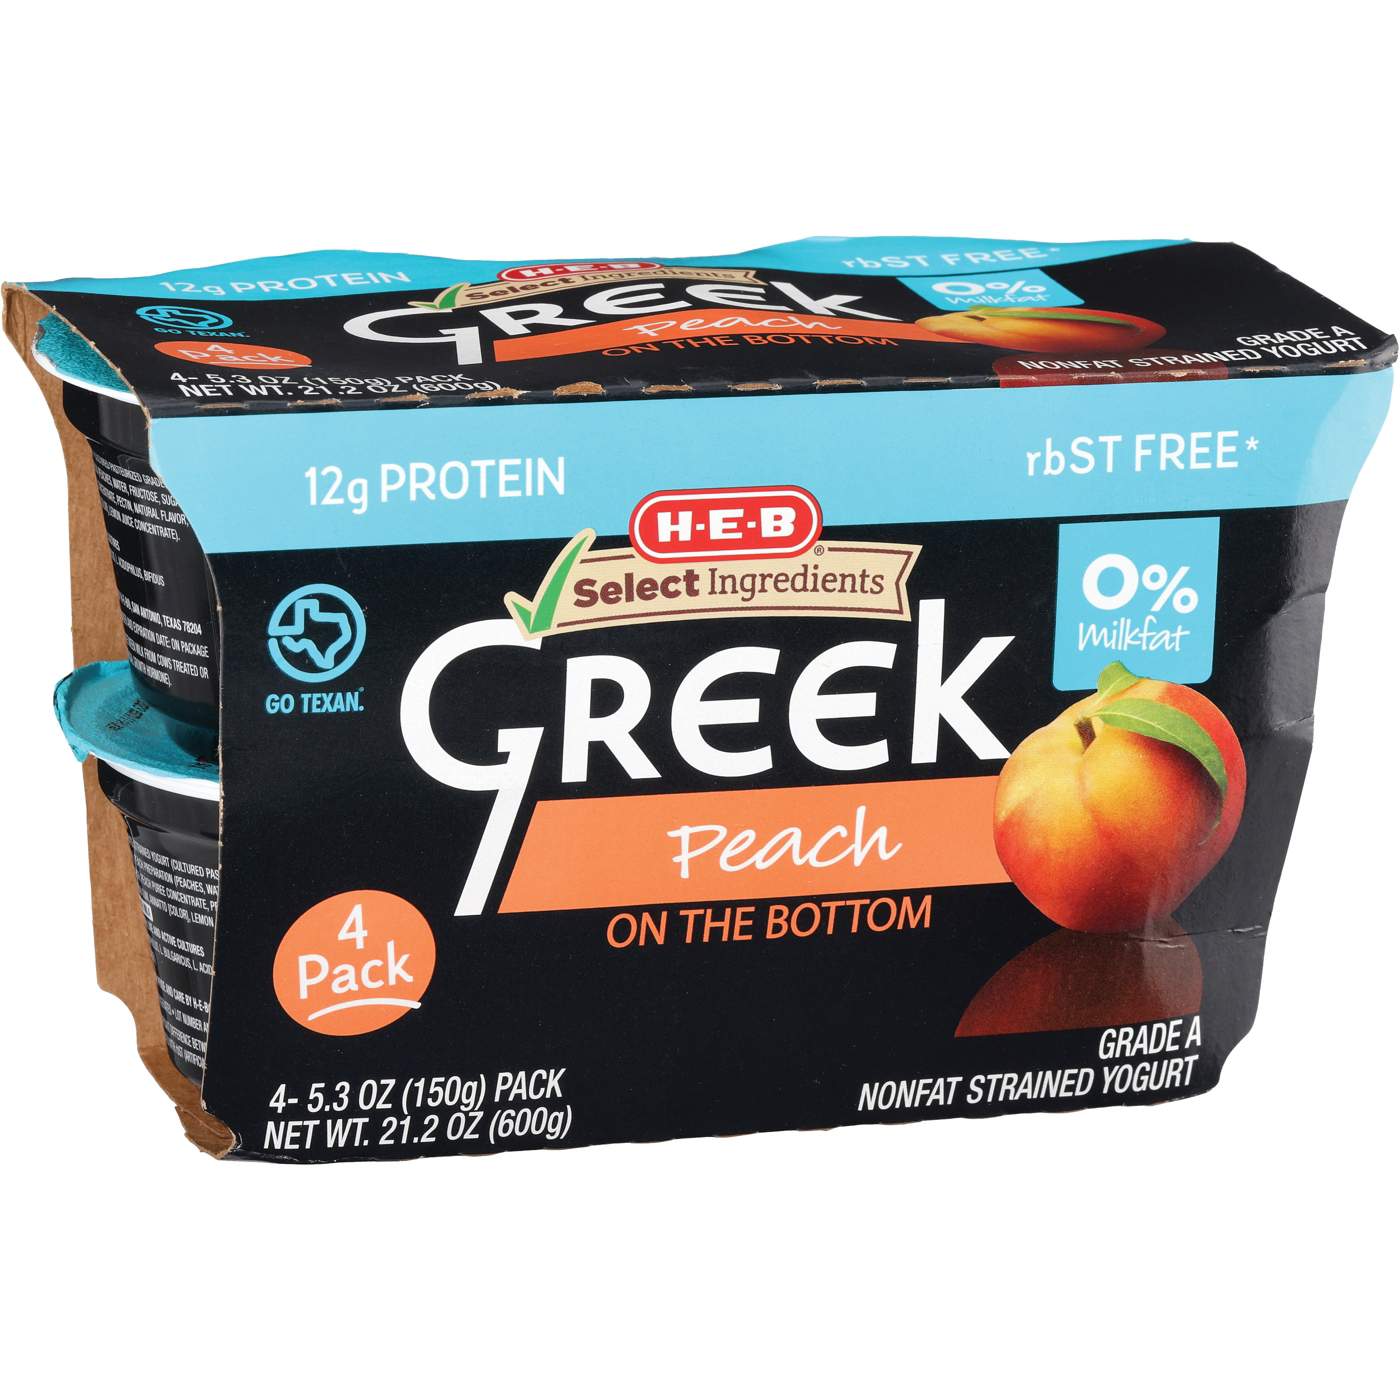 H-E-B Non-Fat Peach on the Bottom Greek Yogurt; image 2 of 2